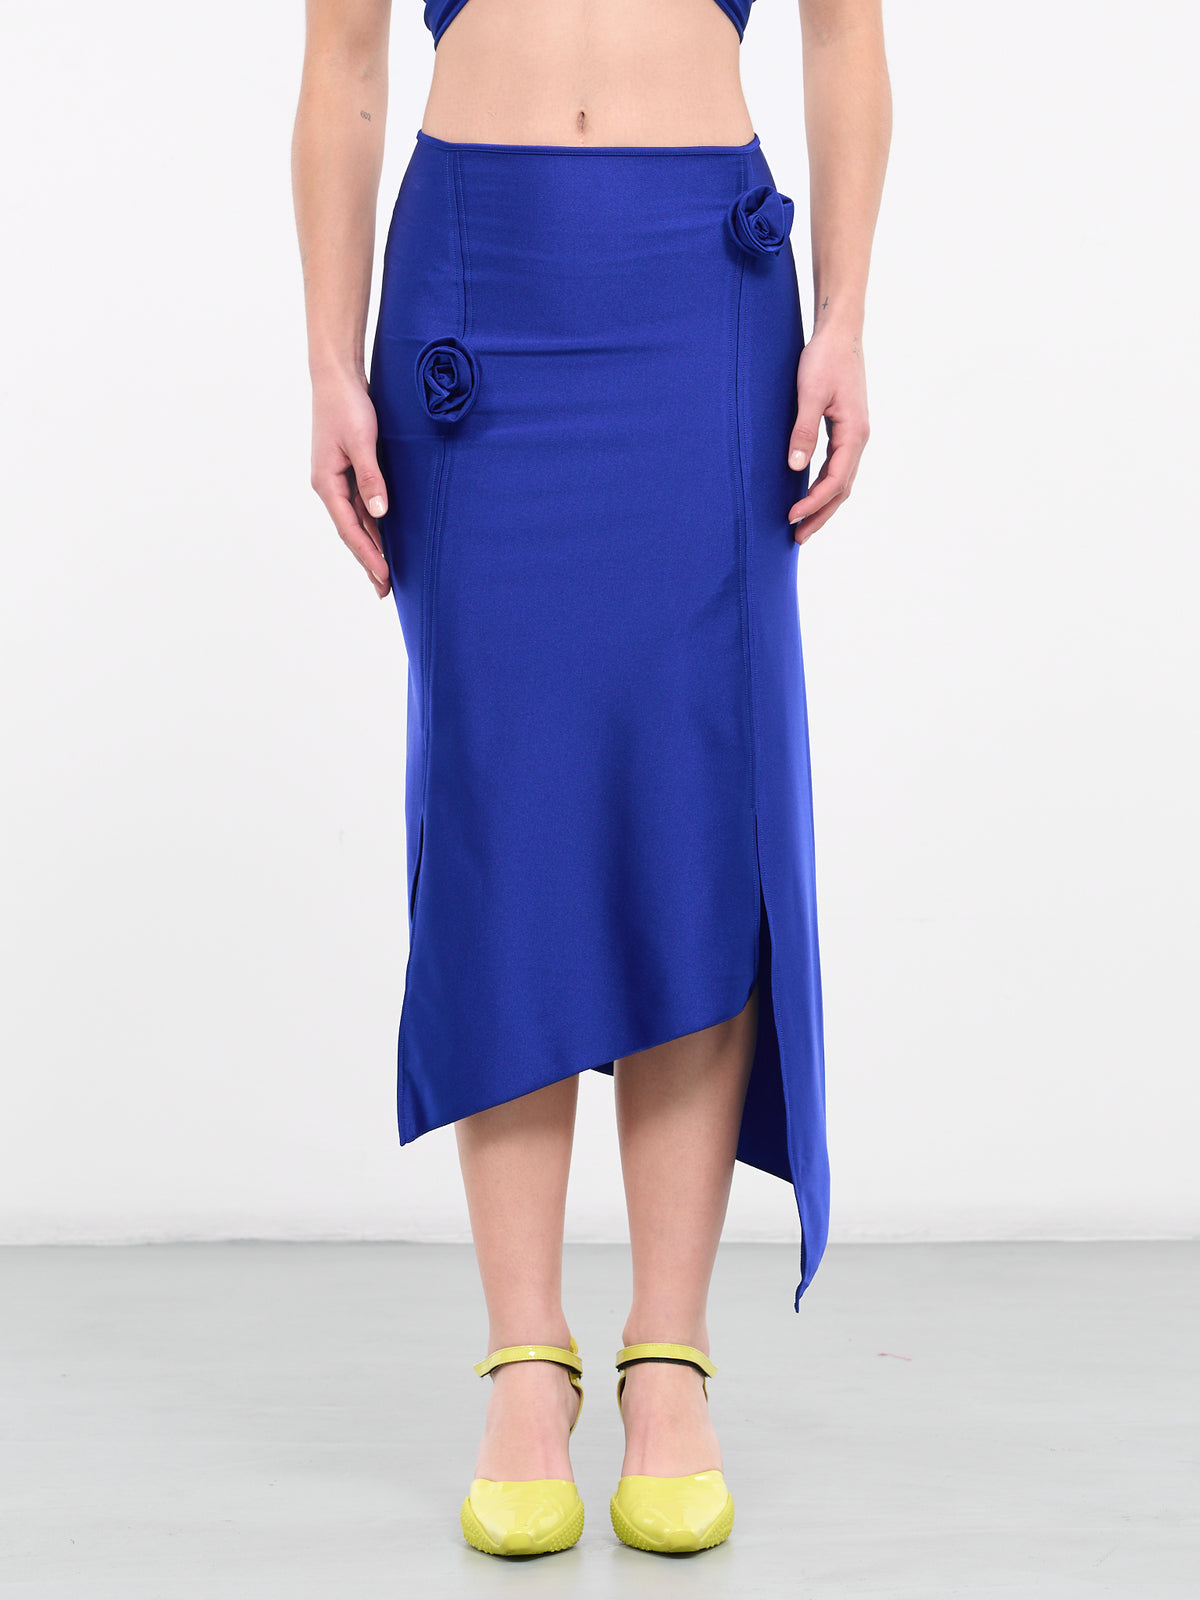 Flower Skirt (COPJS30545-BLUE)